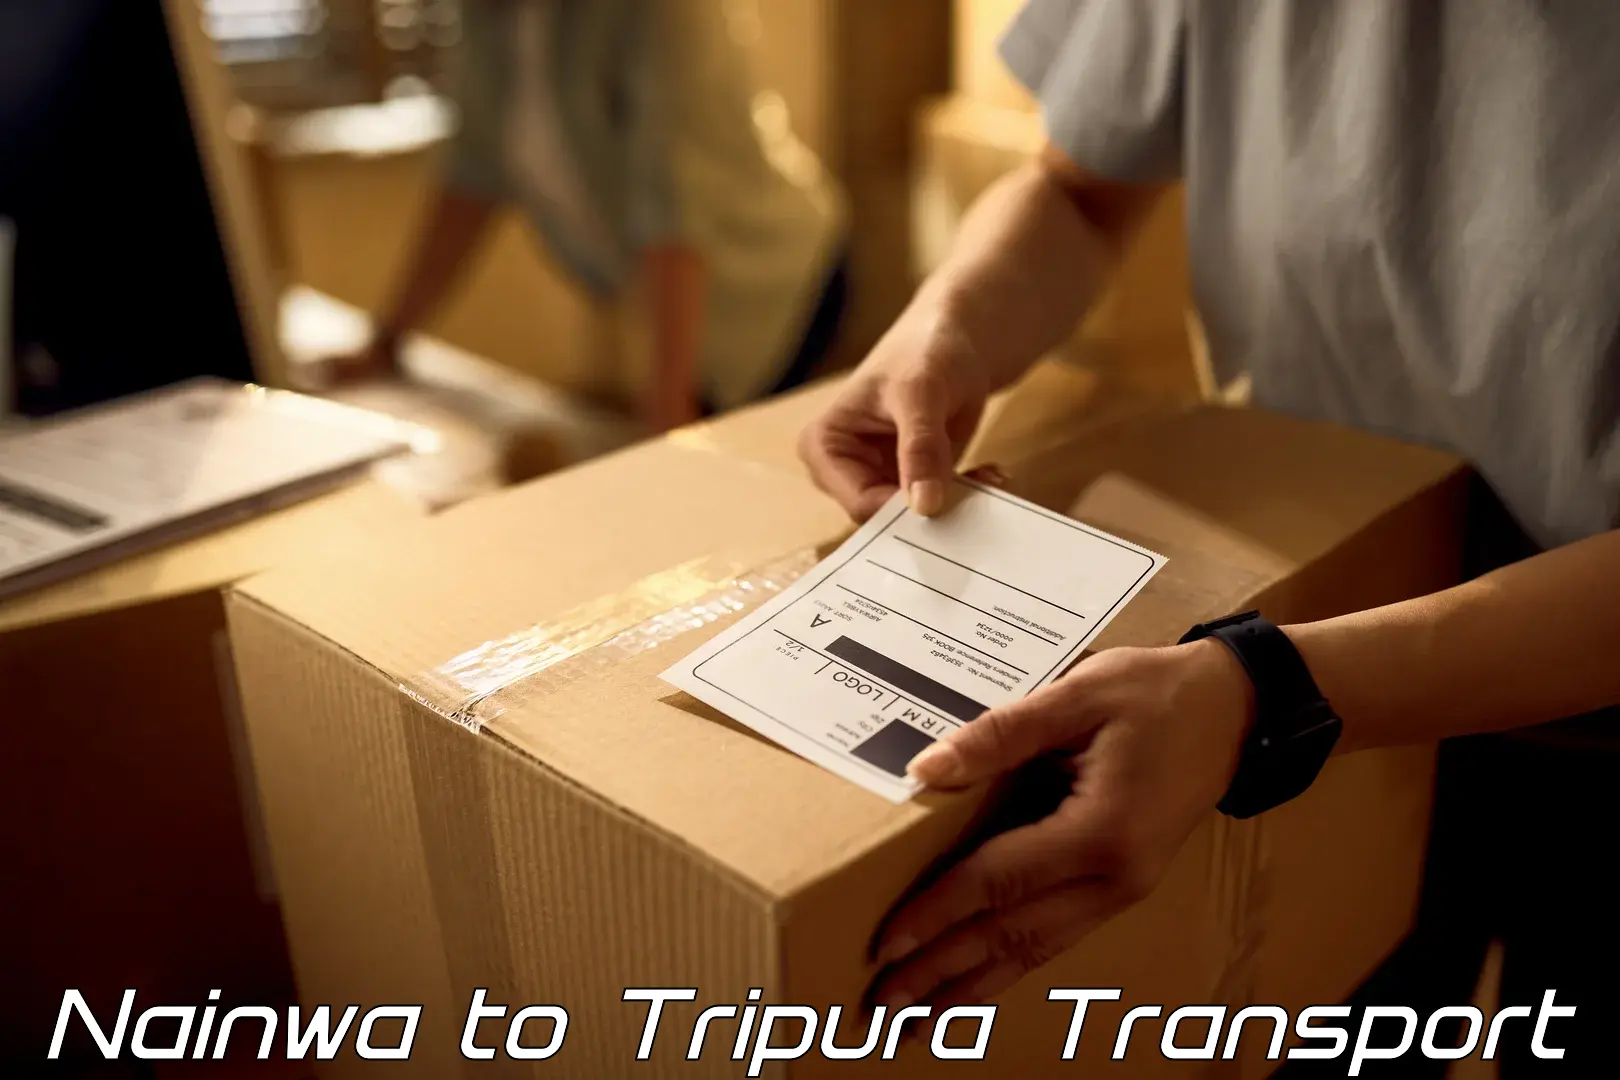 Shipping partner Nainwa to Tripura